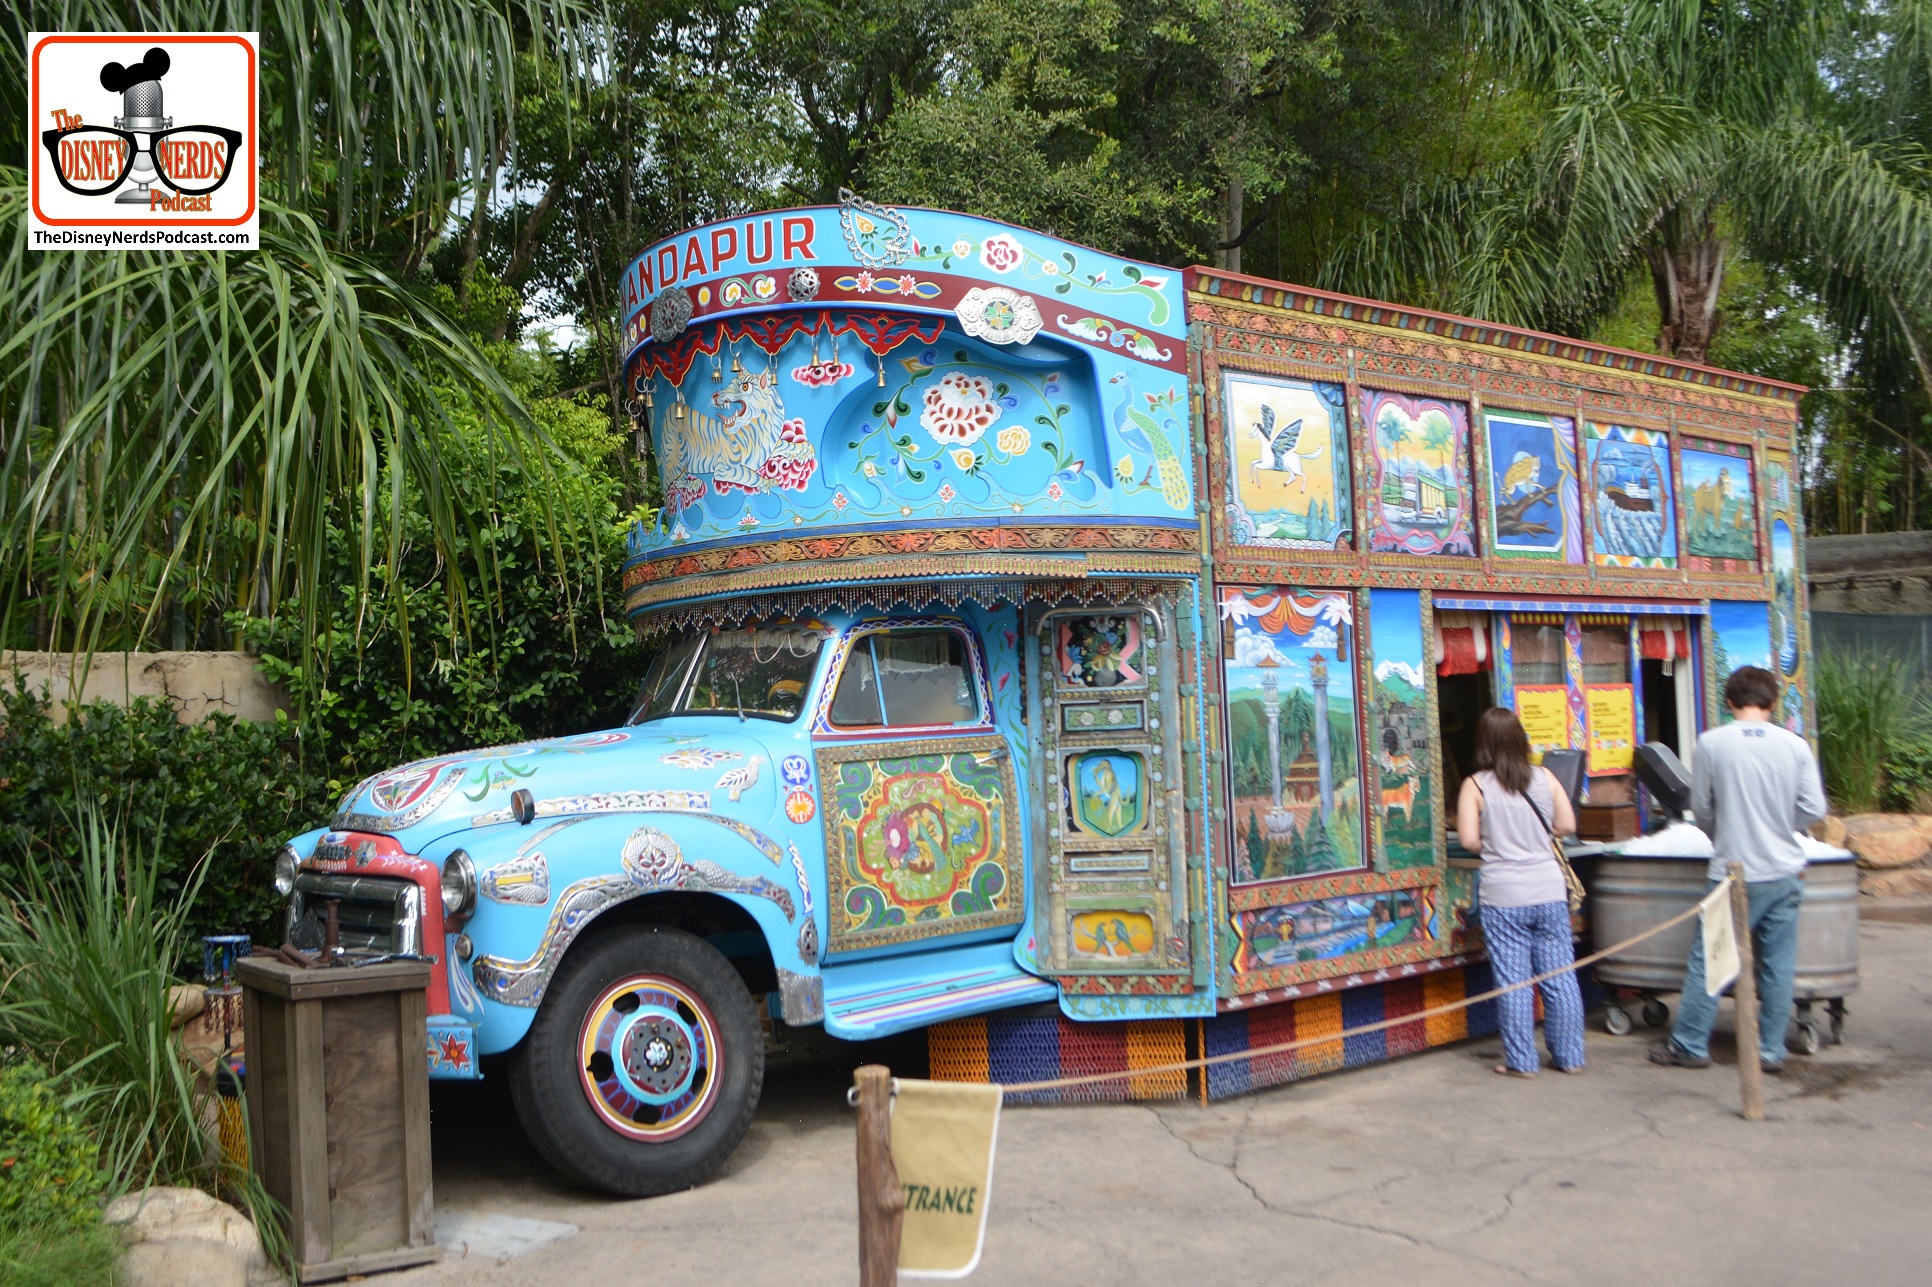 The Original Disney Food Truck - Animal Kingdom